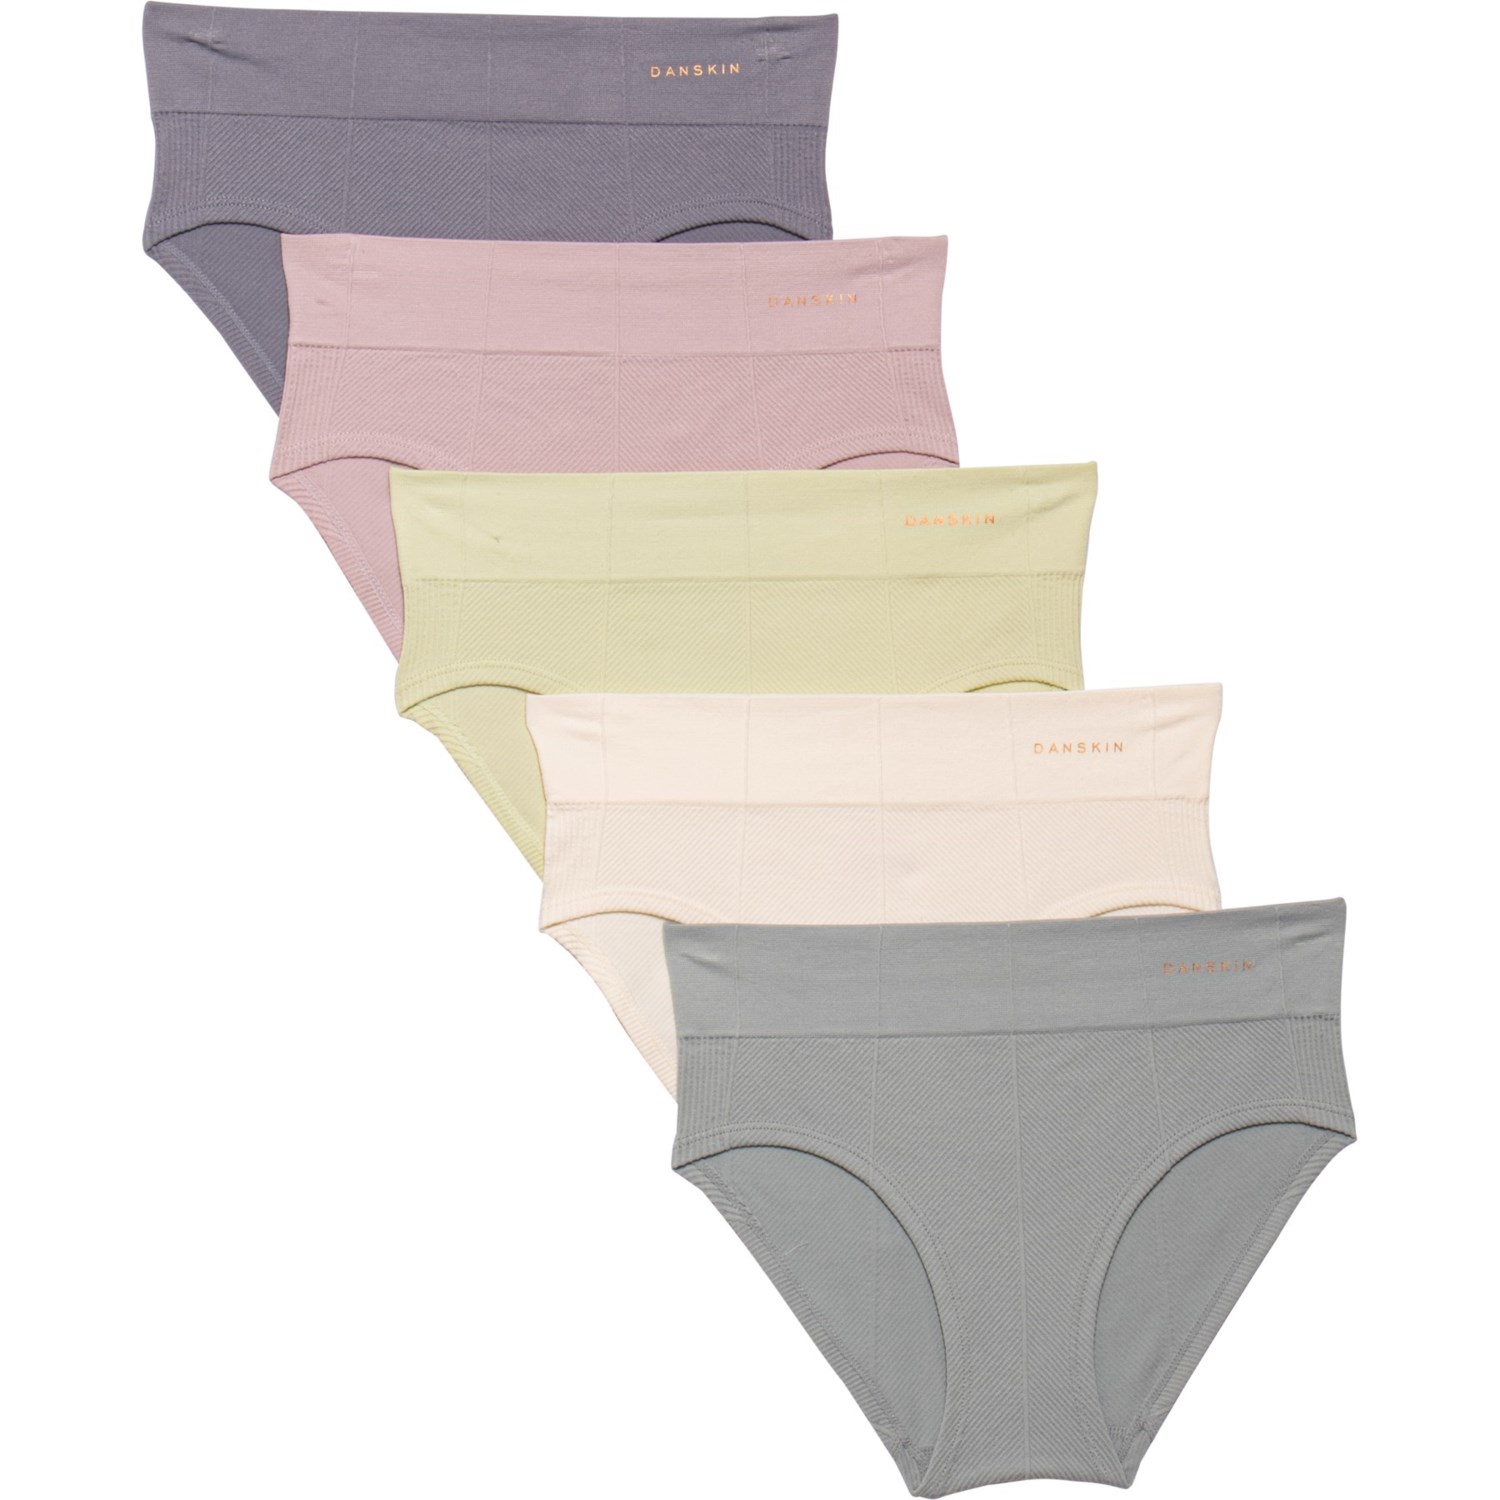 Danskin Textured Ribbed Seamless Panties (For Women) - Save 64%